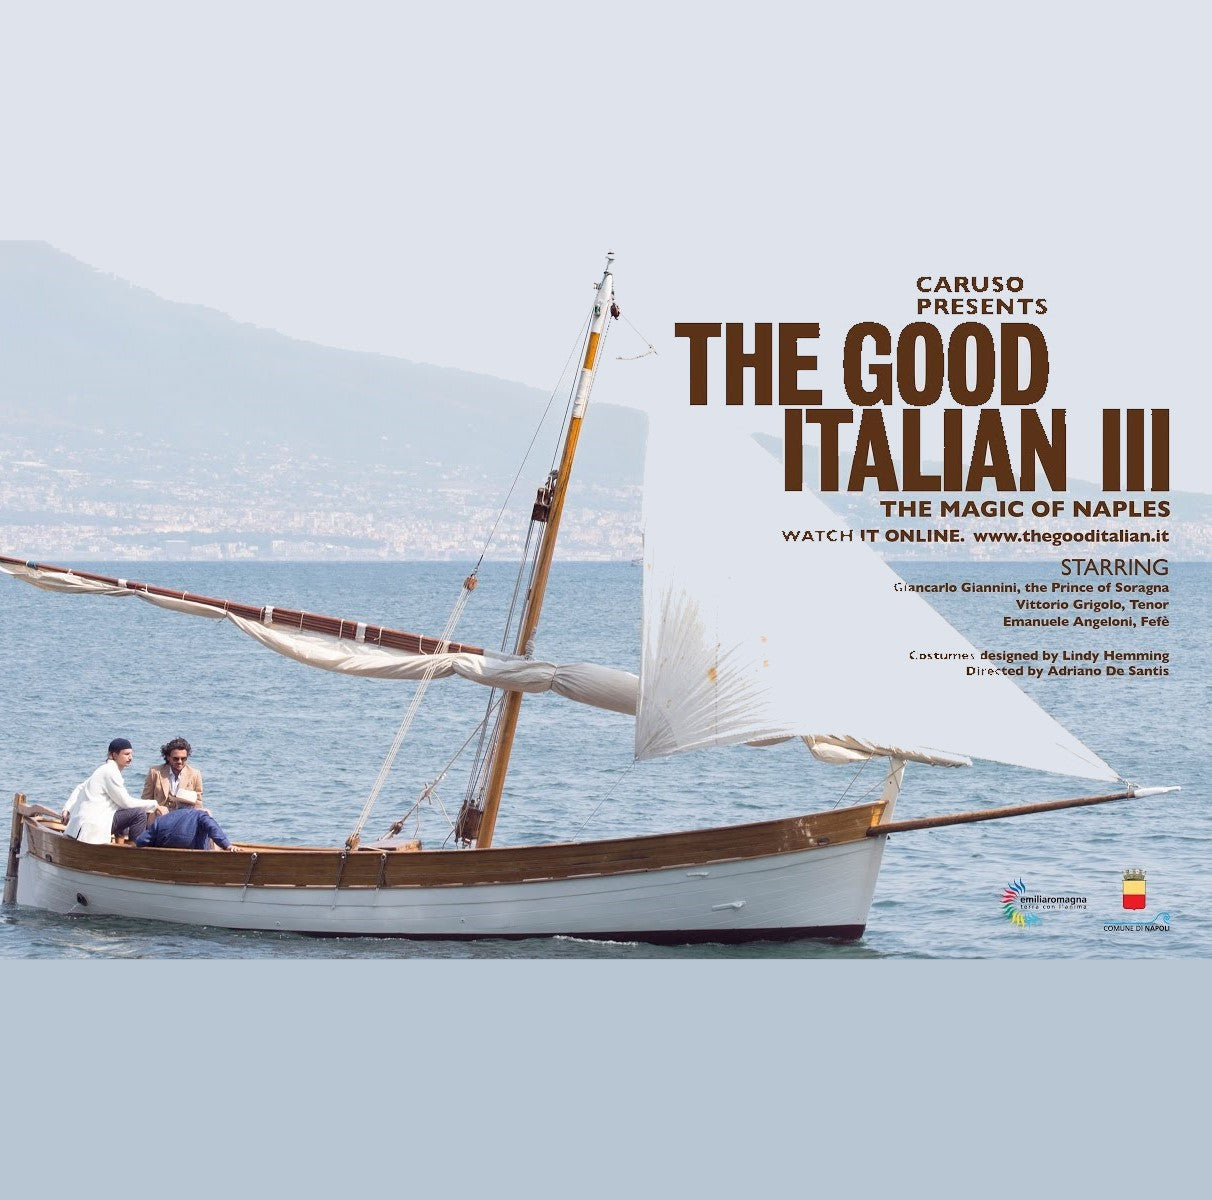 The Good Italian III “The magic of Naples”